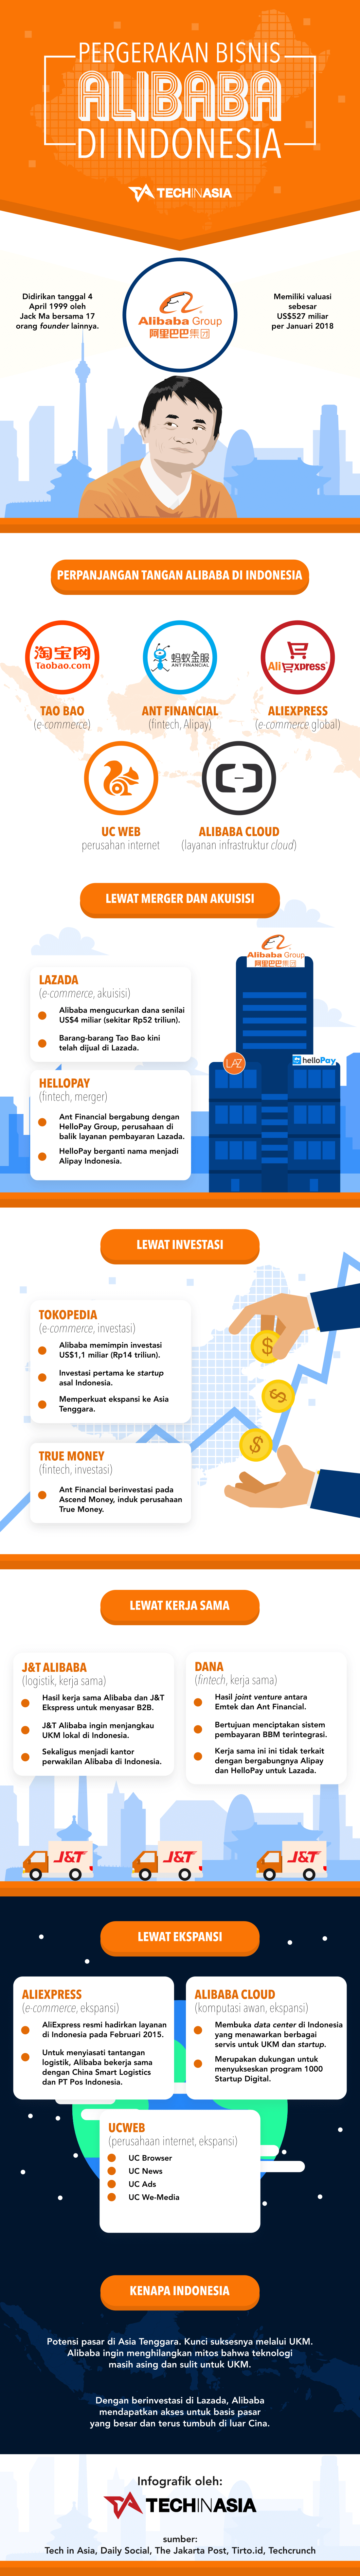 Alibaba di Indonesia | Infografik